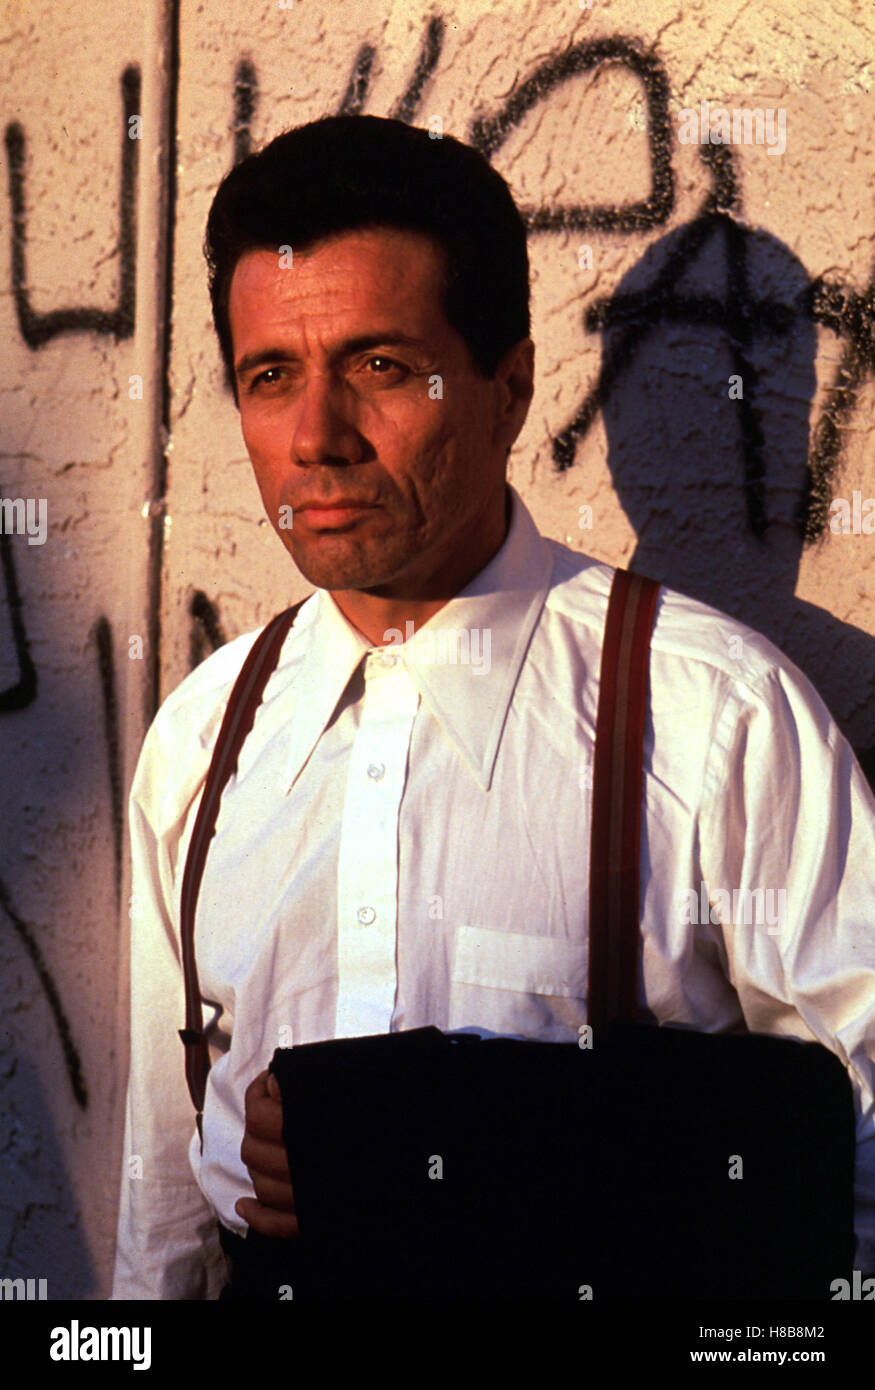 American Me - Das Gesetz der Gewalt, (AMERICAN ME) USA 1992, Regie: Edward James Olmos, EDWARD JAMES OLMOS Stock Photo